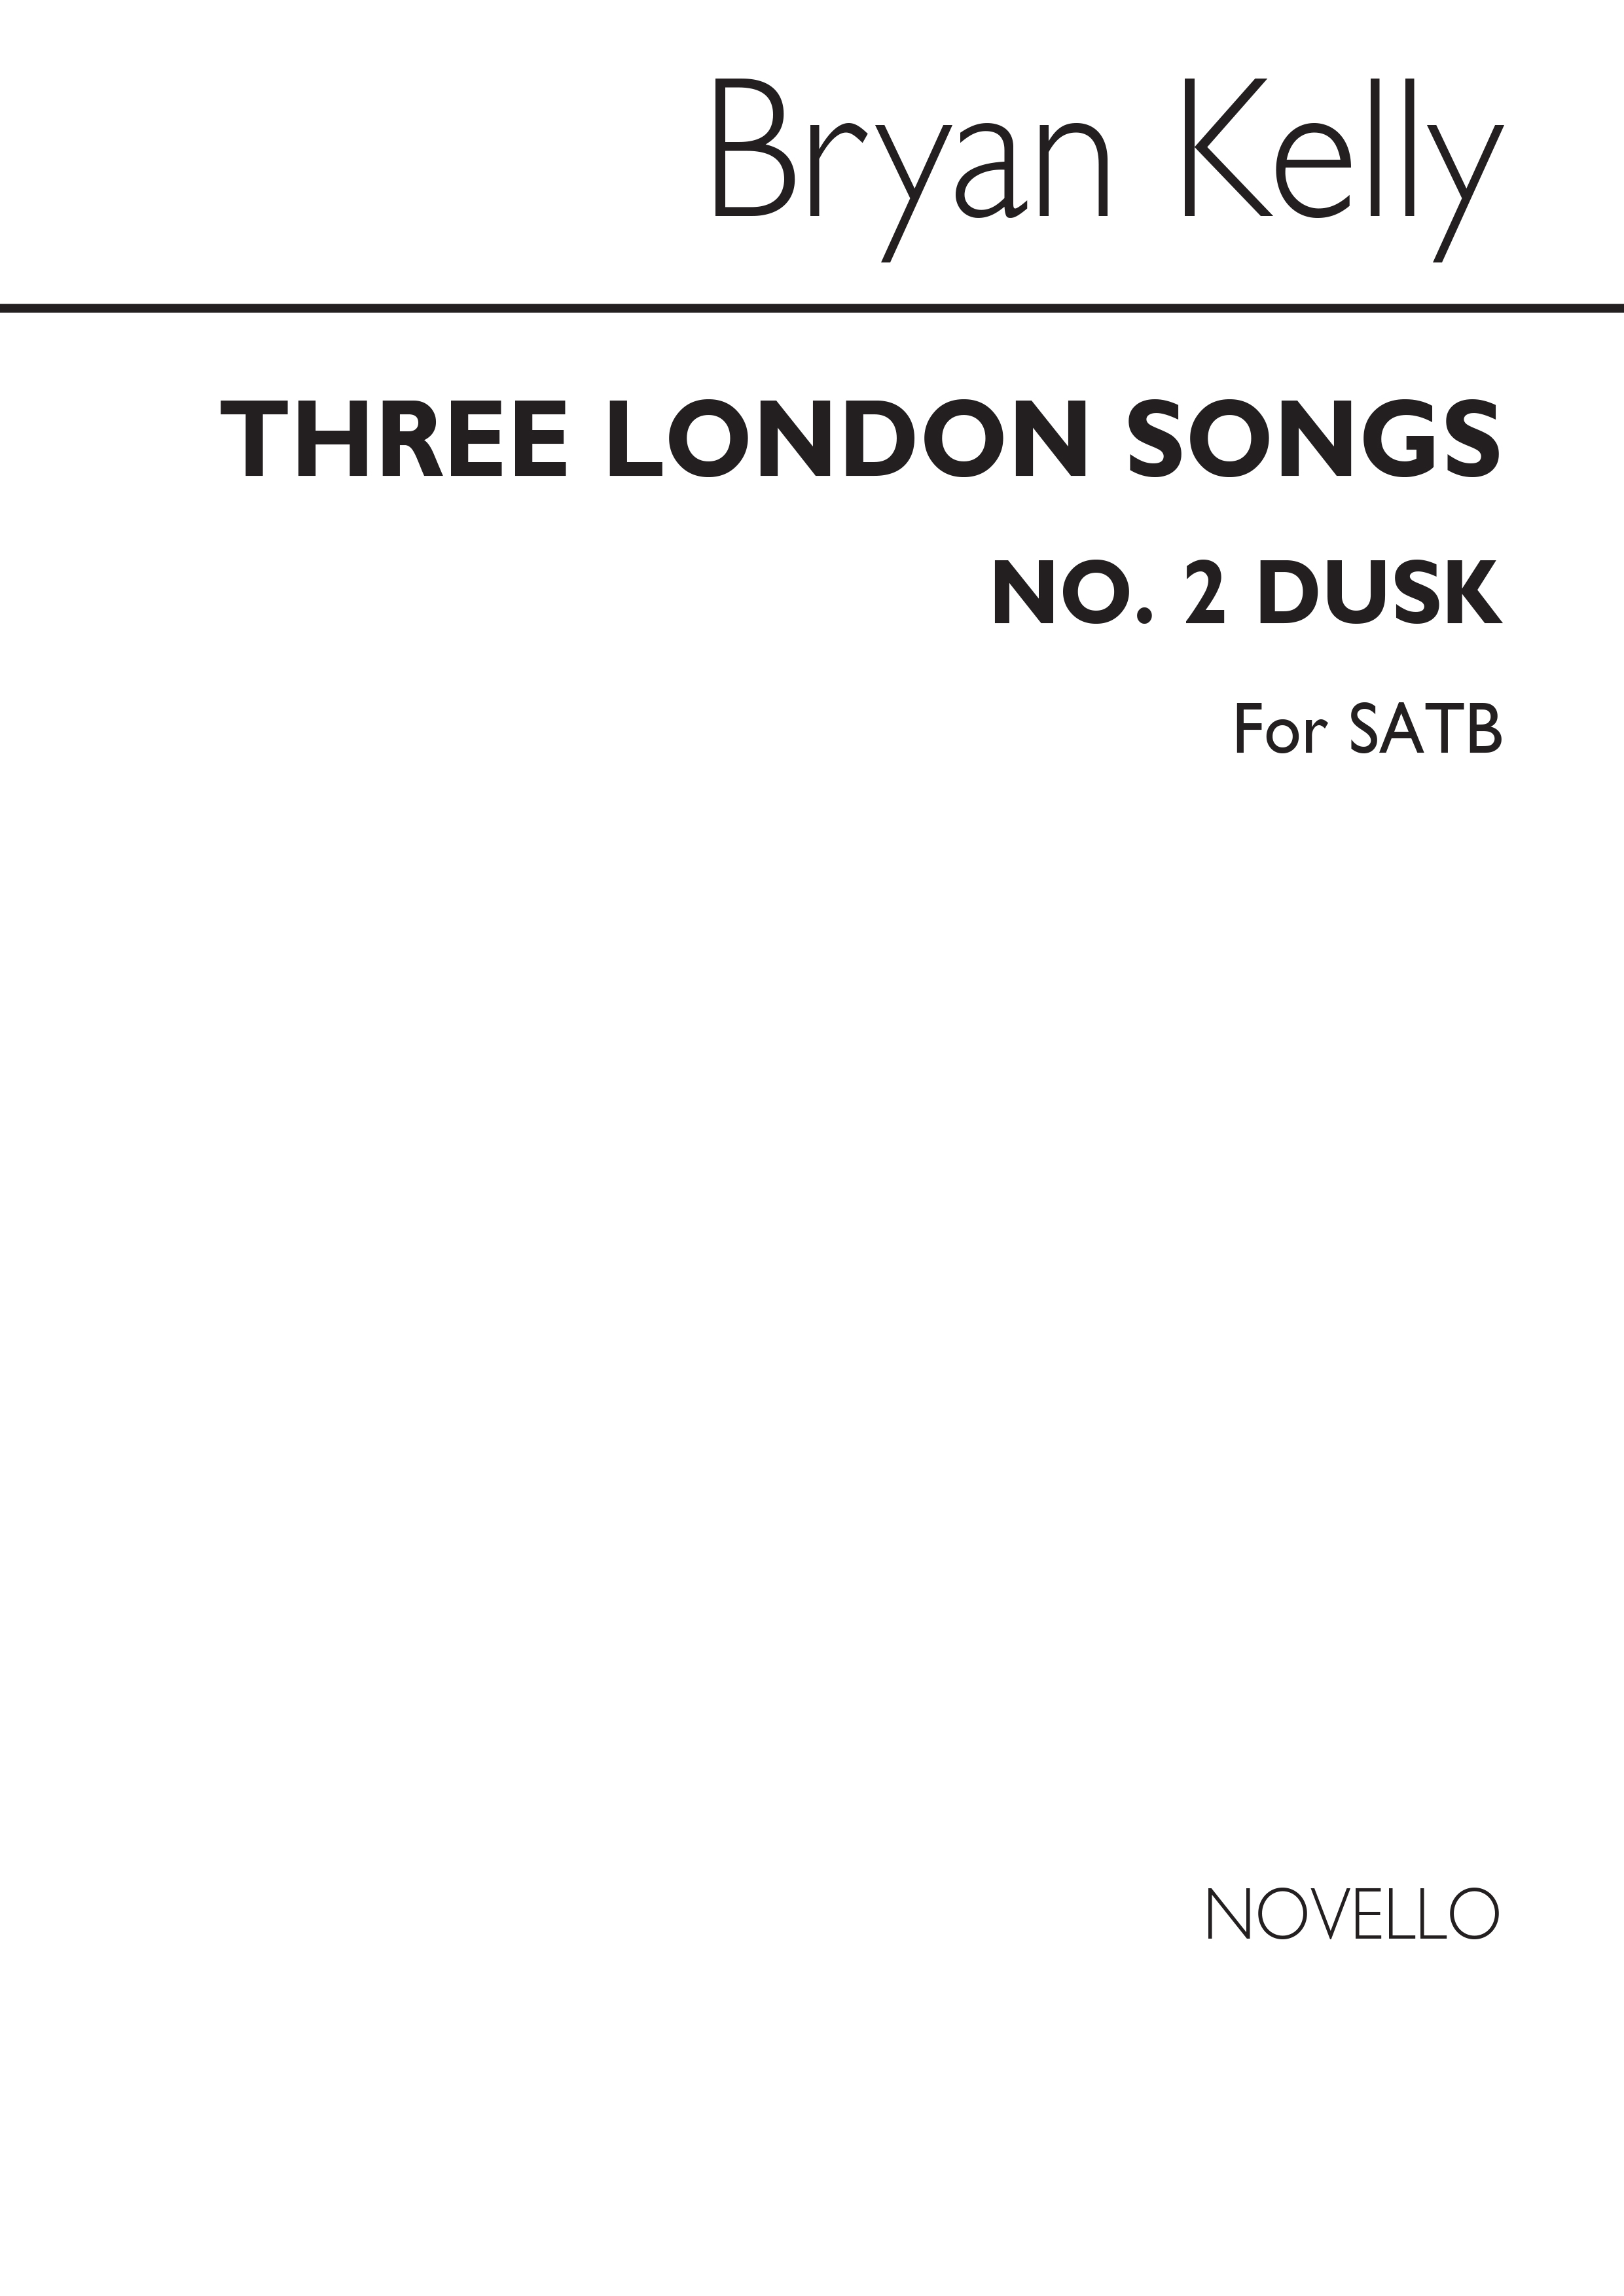 Bryan Kelly: Three London Songs No. 2 Dusk